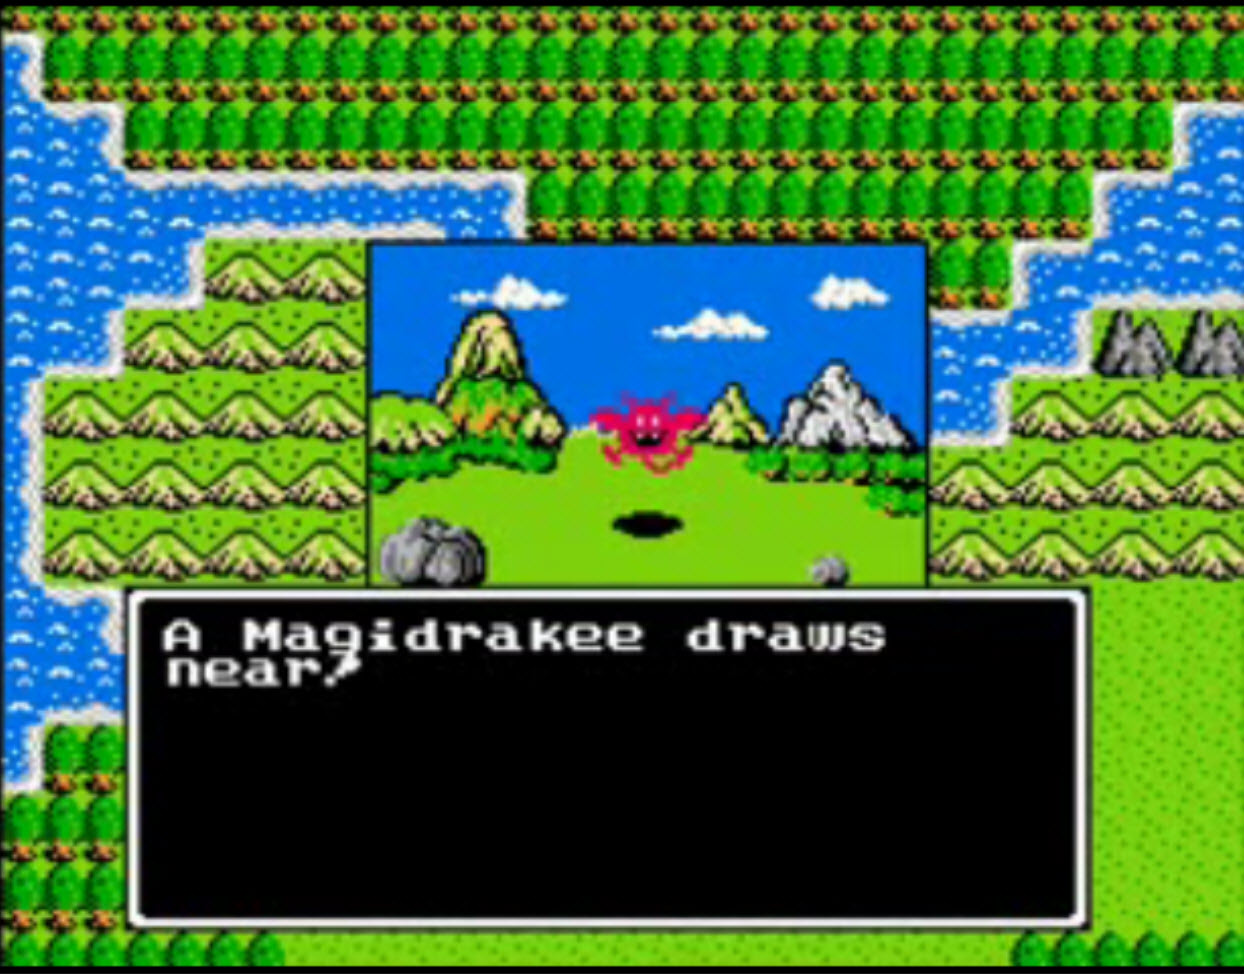 Dragon Quest 1, Software